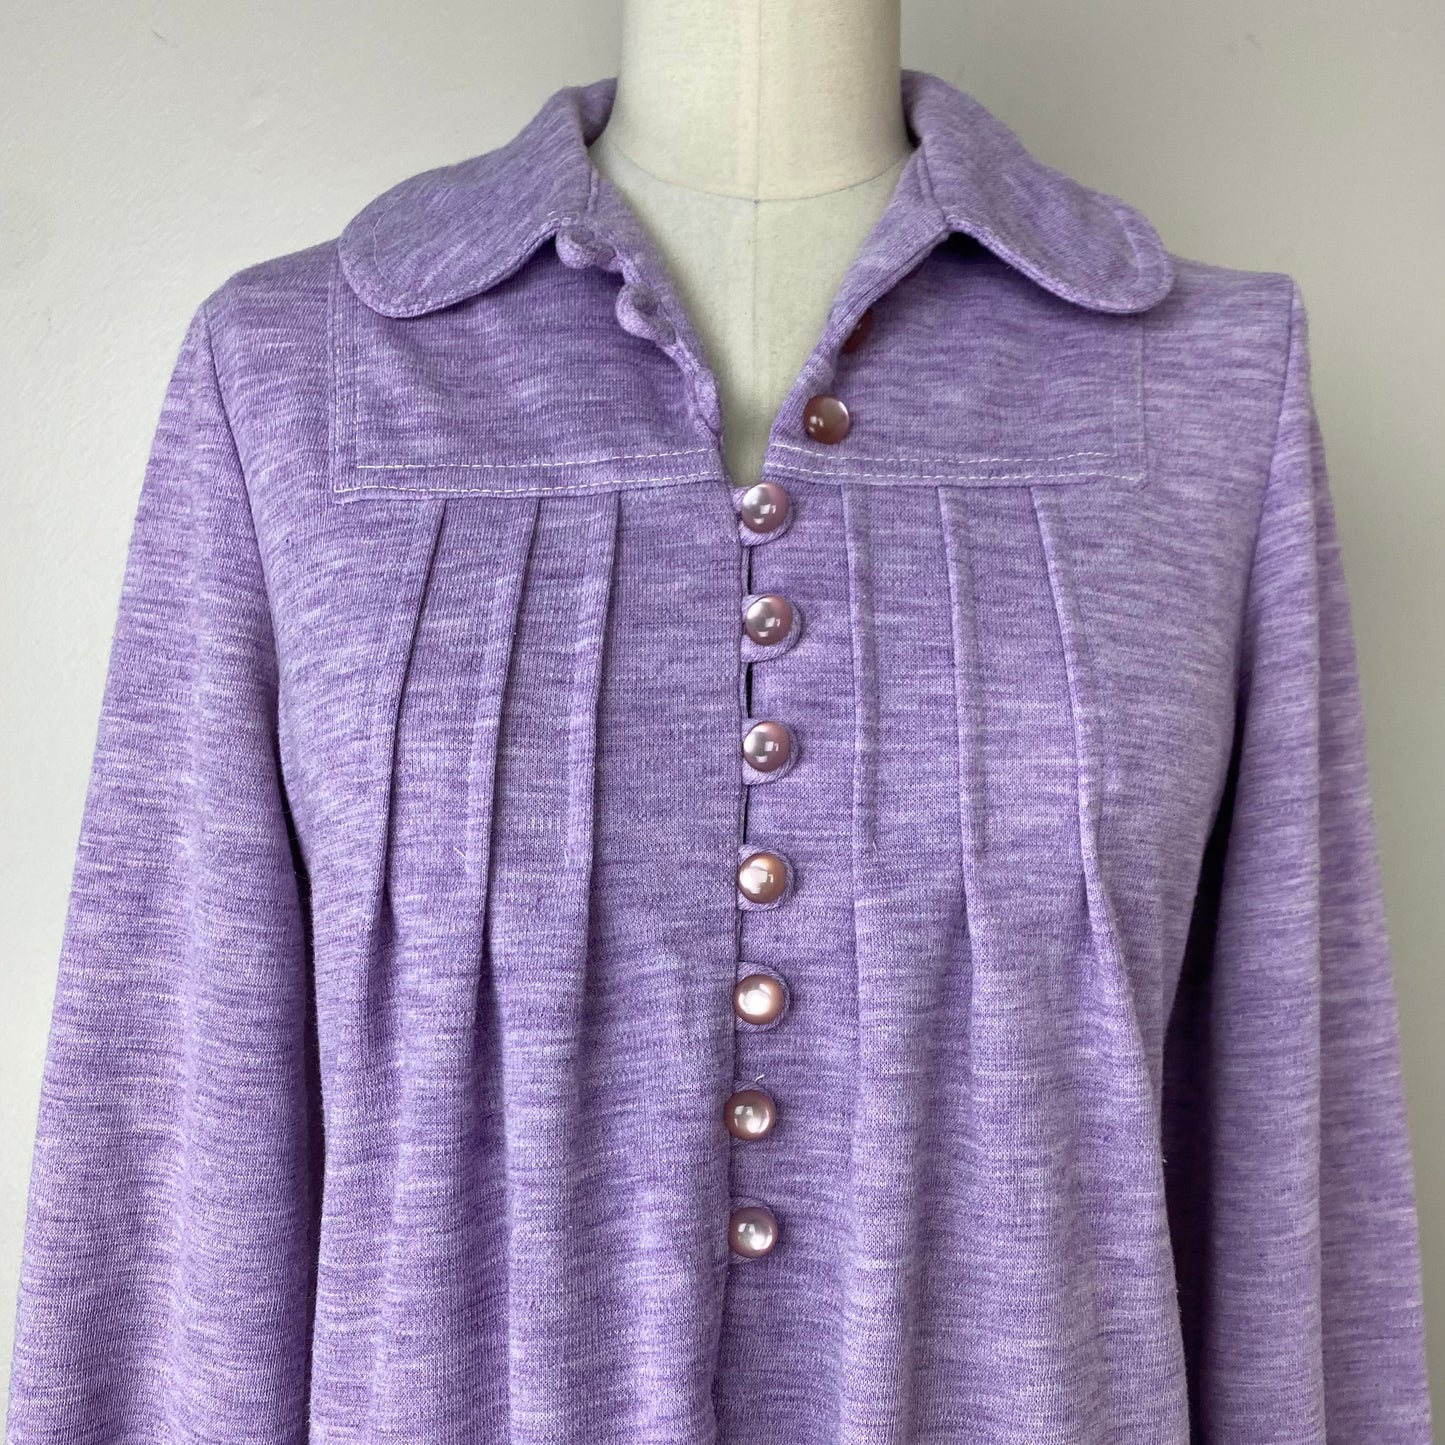 1970s Mod Knit Mini Dress, Size Small, Heathered Purple, Peter Pan Collar